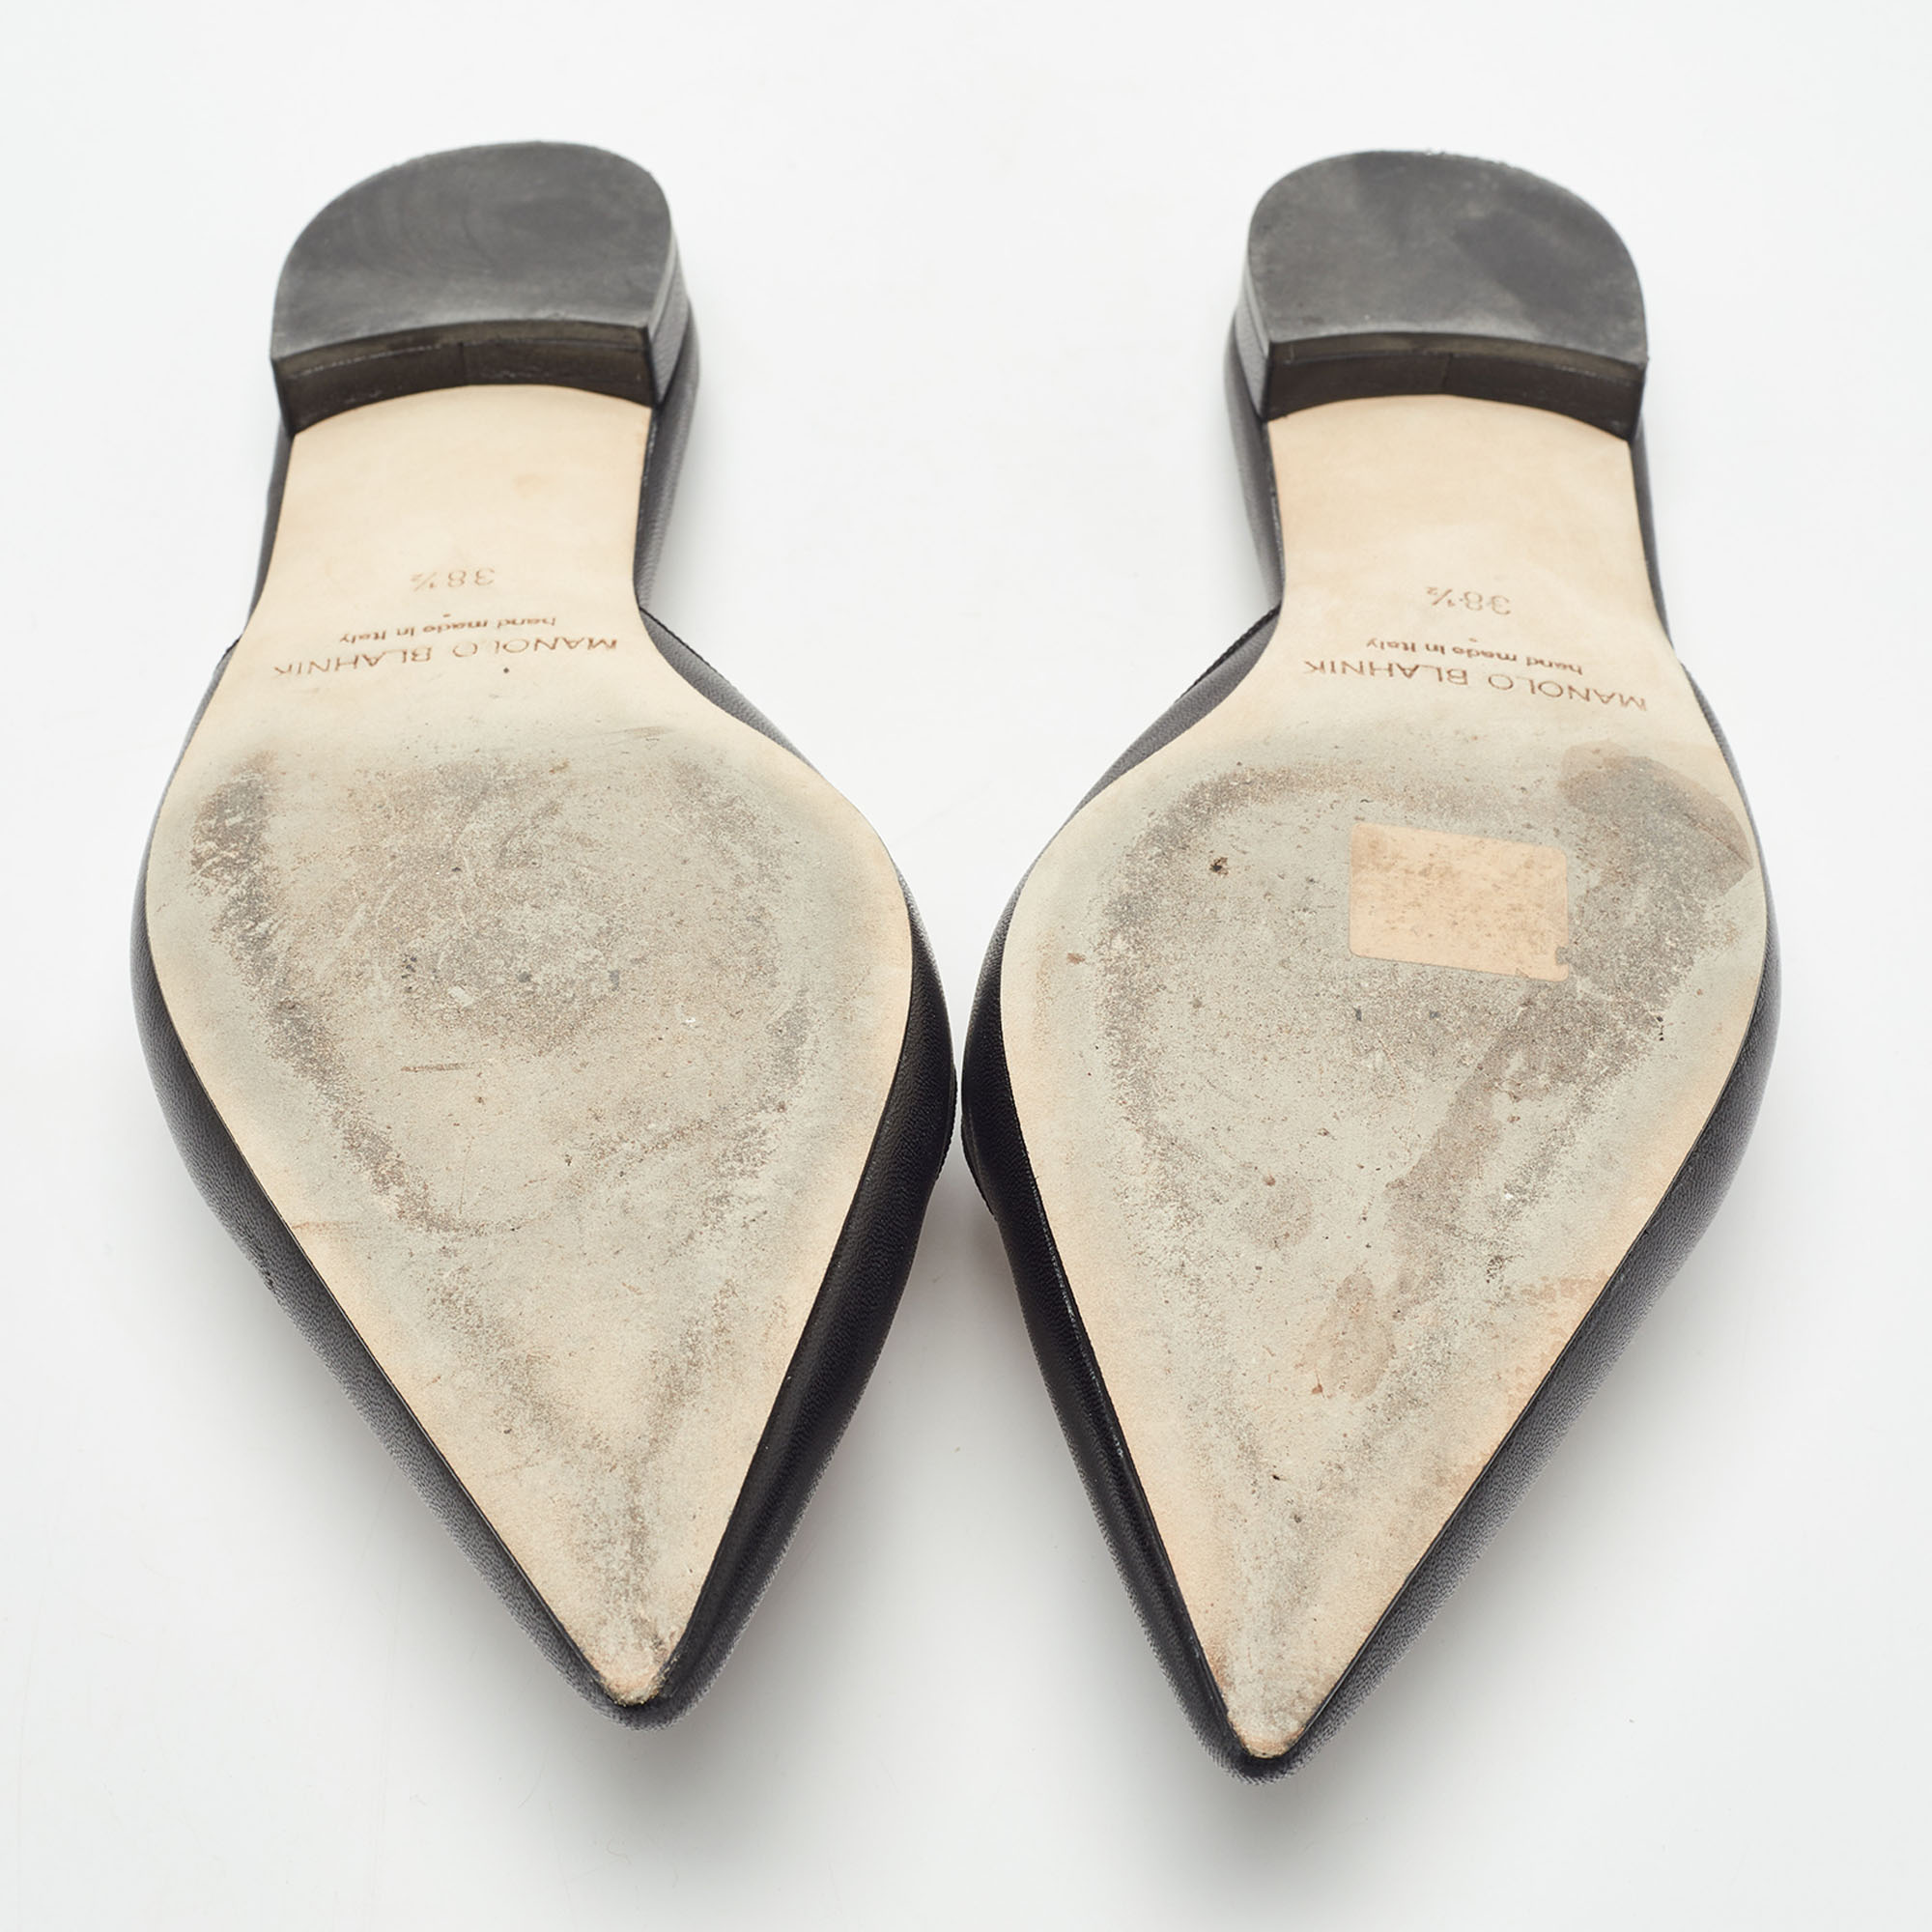 Manolo Blahnik Black Leather Camparimu Flat Mules Size 38.5